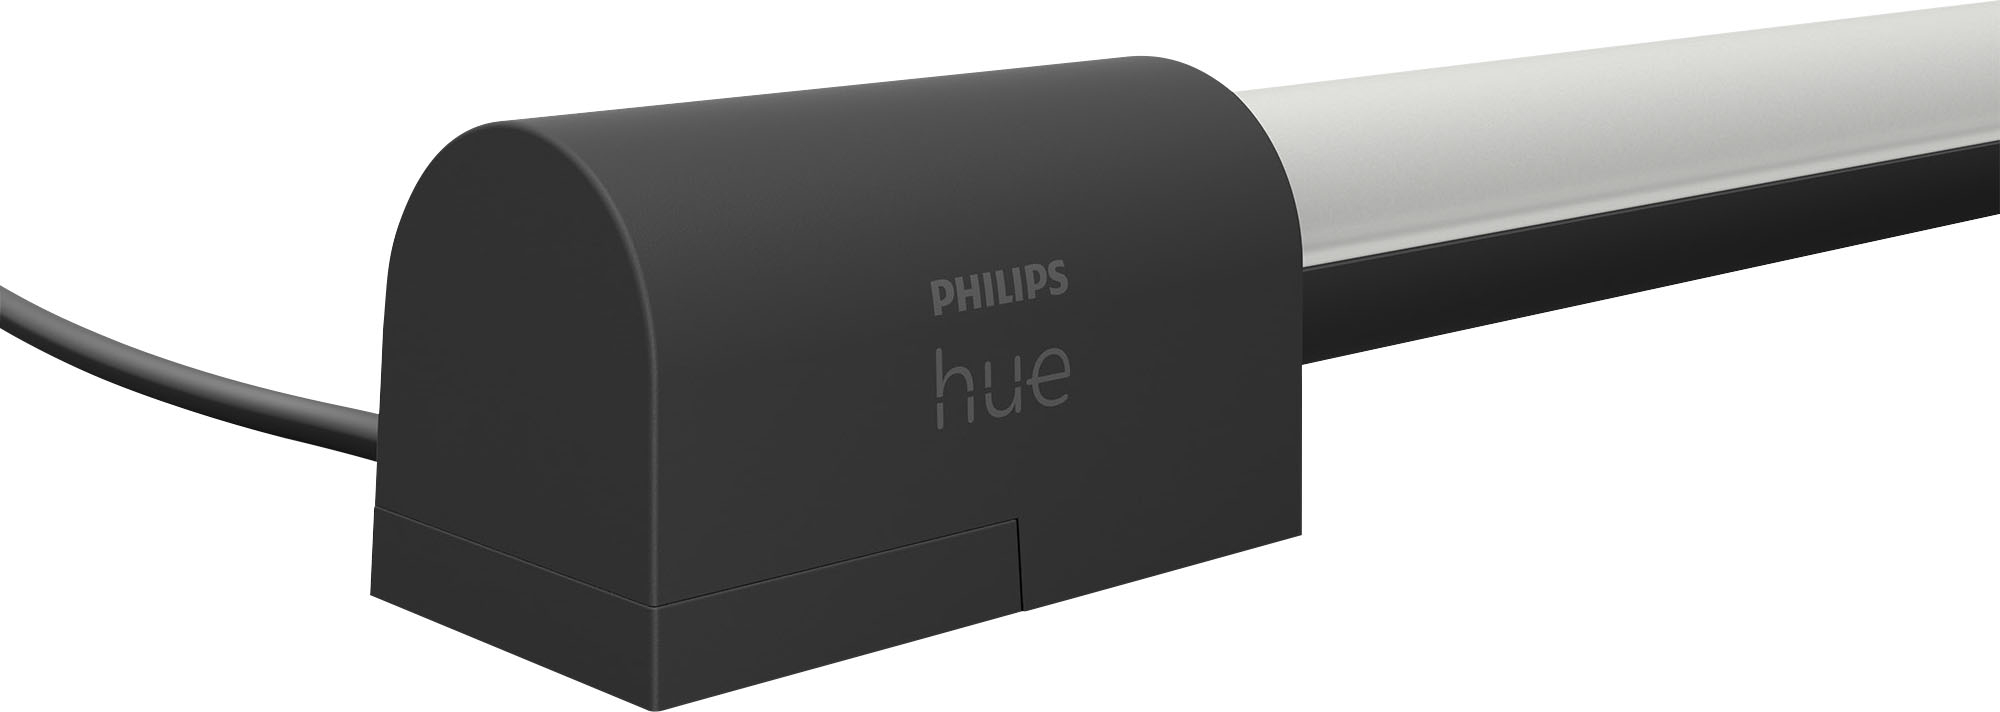 Philips Hue Play Gradient Light Tube (Large, Black) 569137 B&H